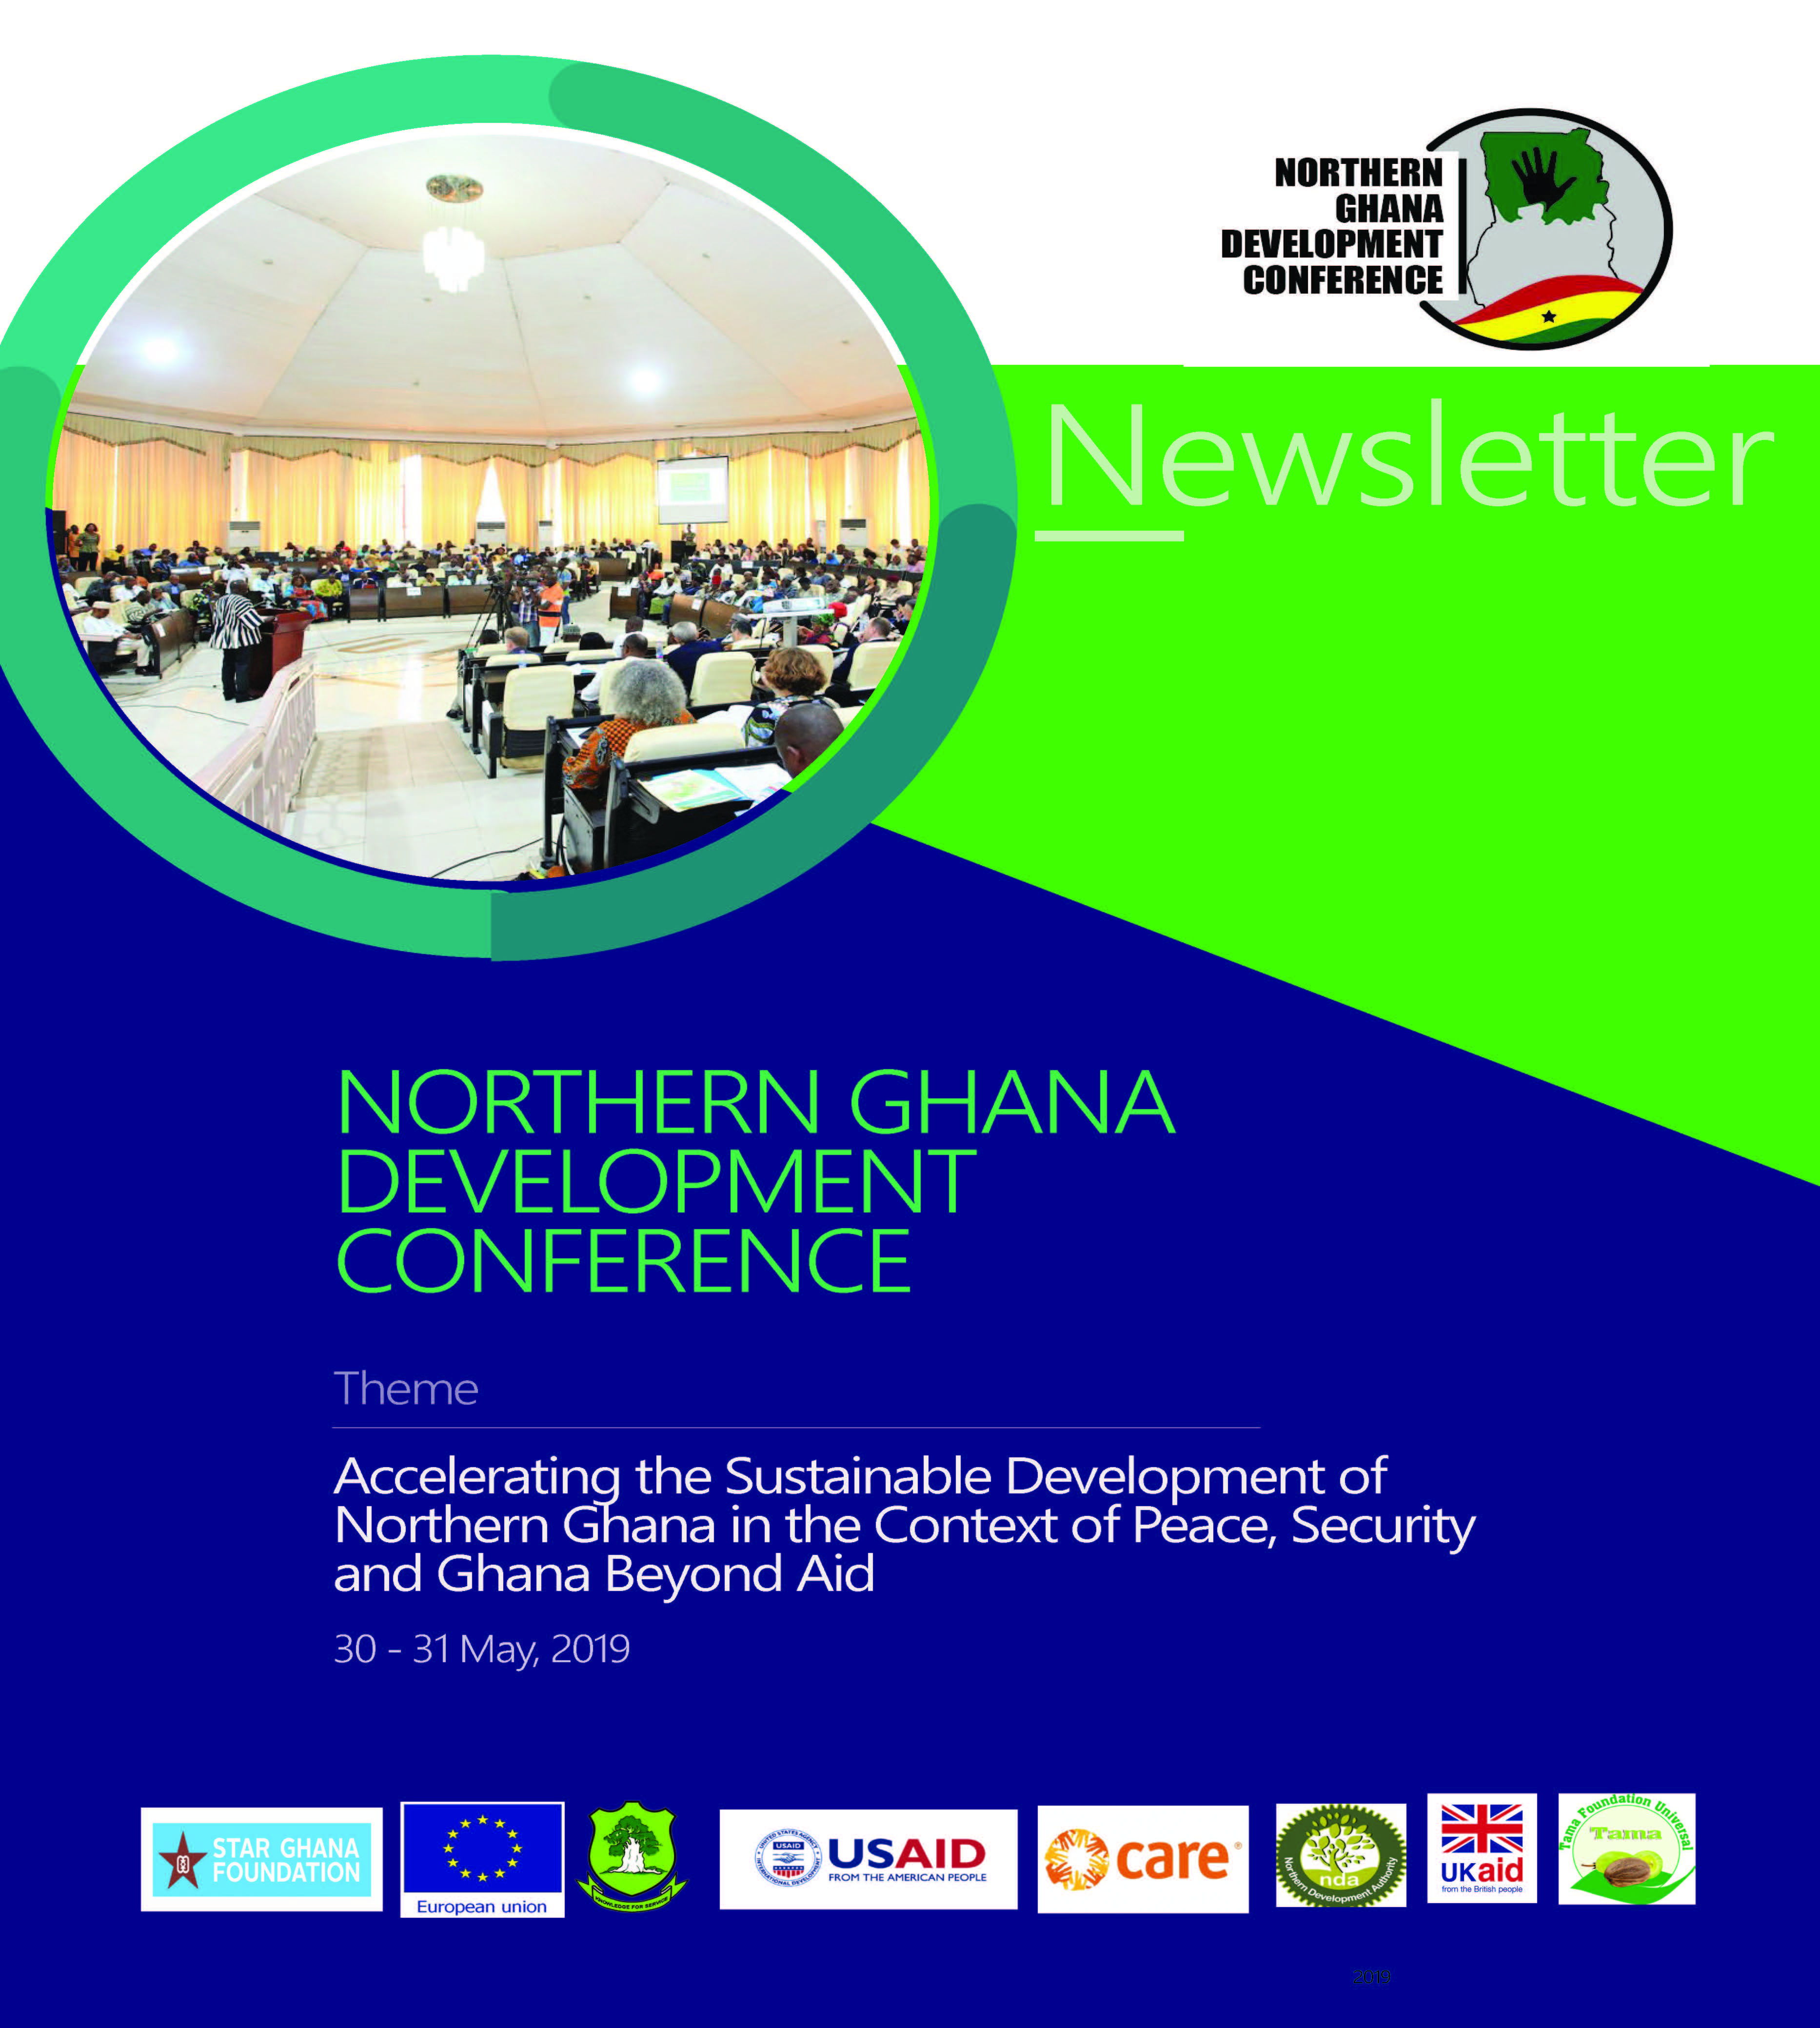 STAR Ghana Foundation - 2019 Northern Ghana  Development Conference Newsletter